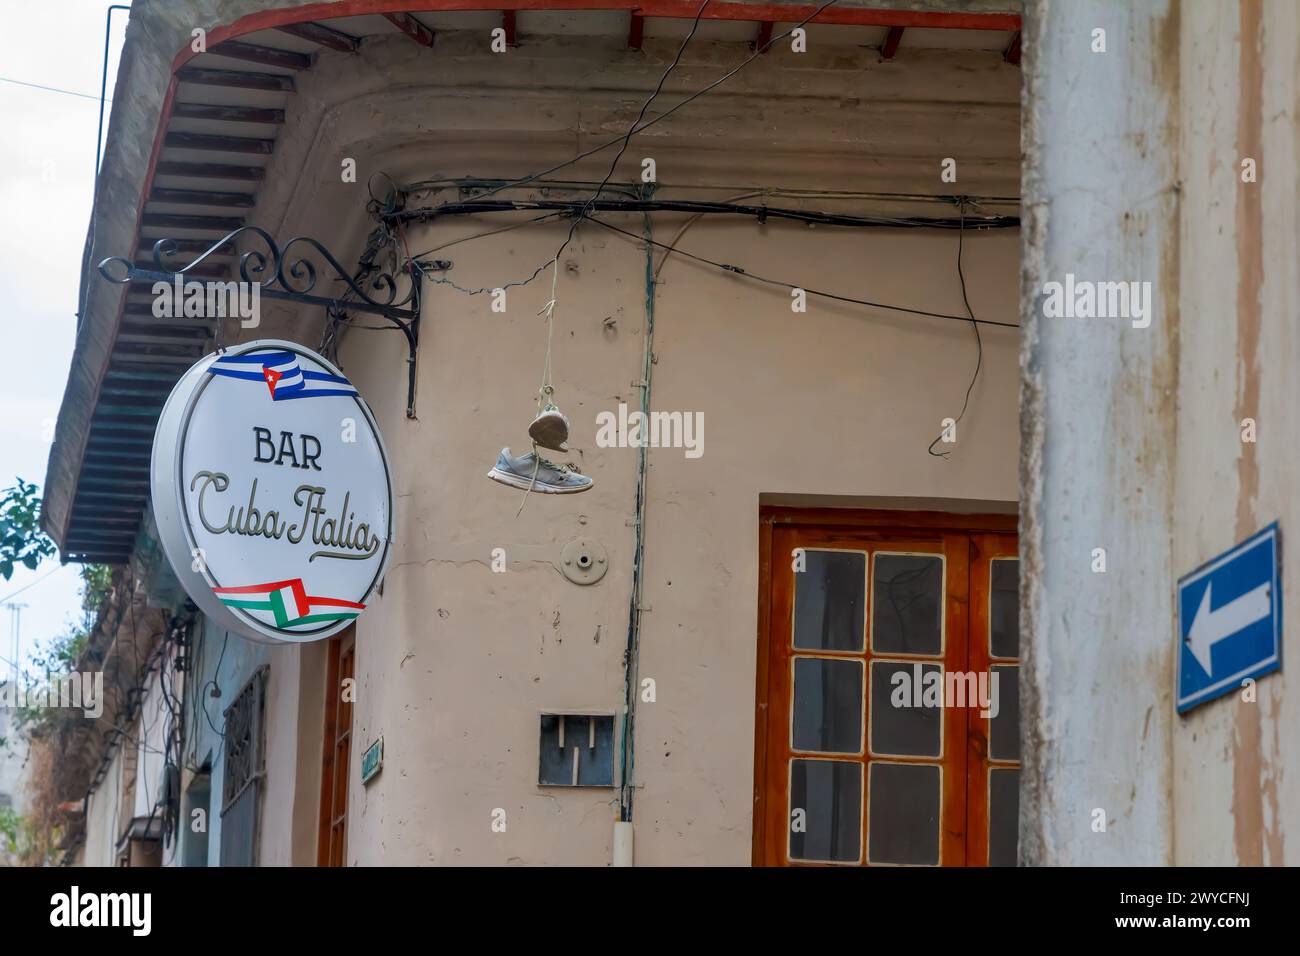 Sign of small business Bar Cuba-Italia, in Havana, Cuba Stock Photo